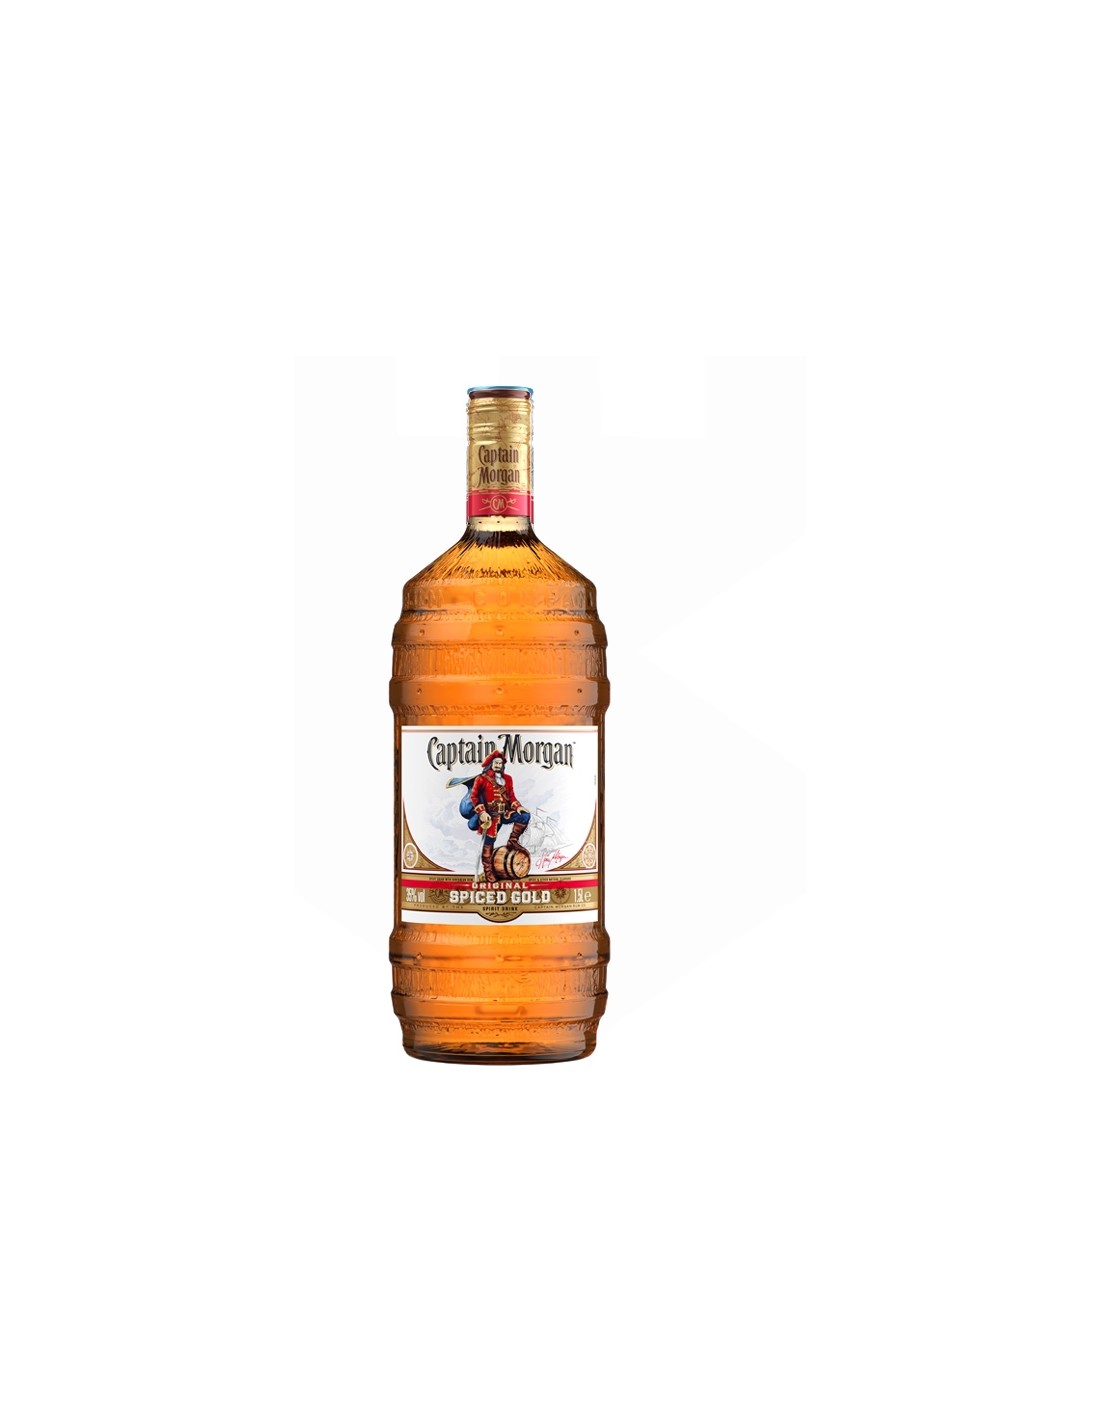 Rom Captain Morgan Spiced Gold, 35% alc., 1.5L, Jamaica alcooldiscount.ro